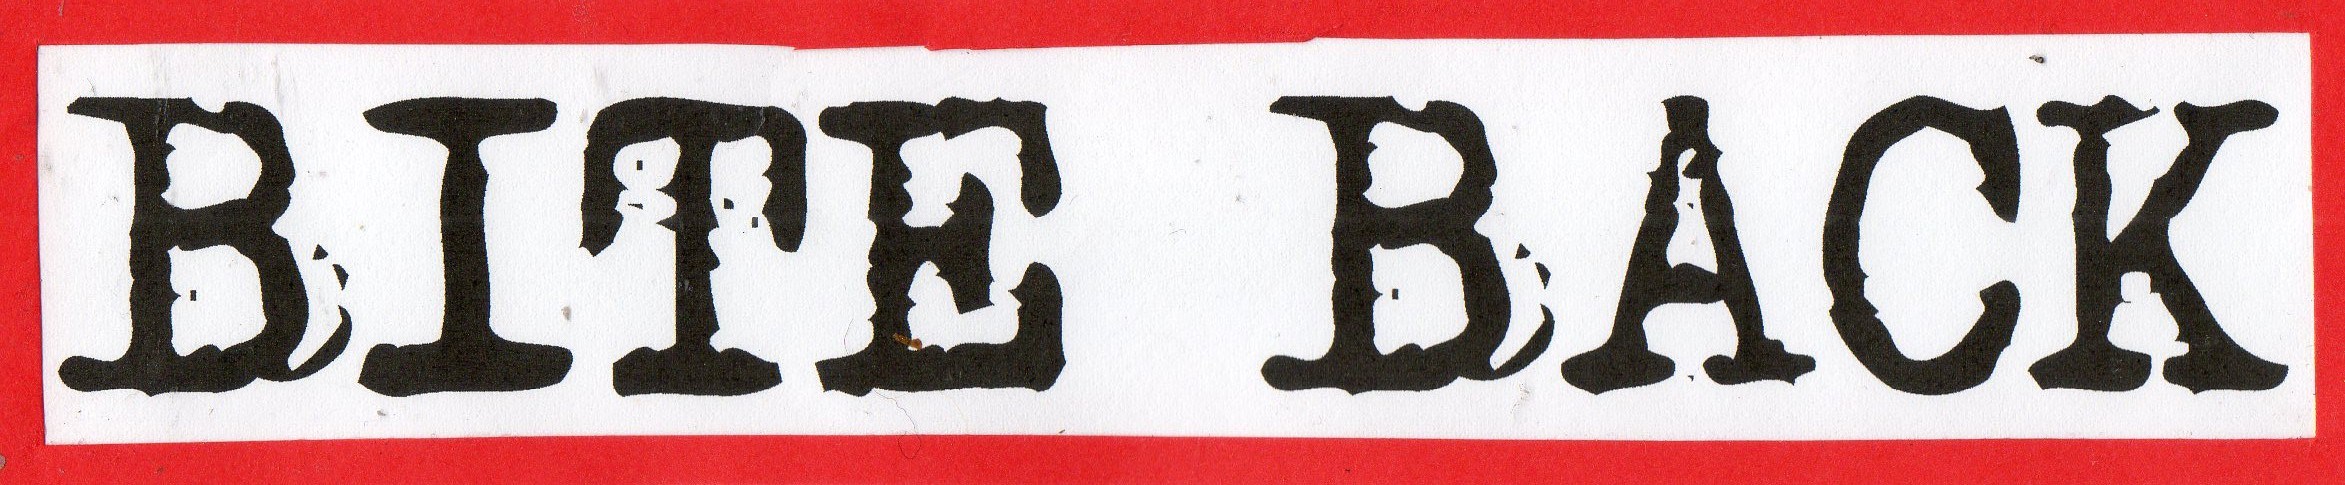 biteback red logo